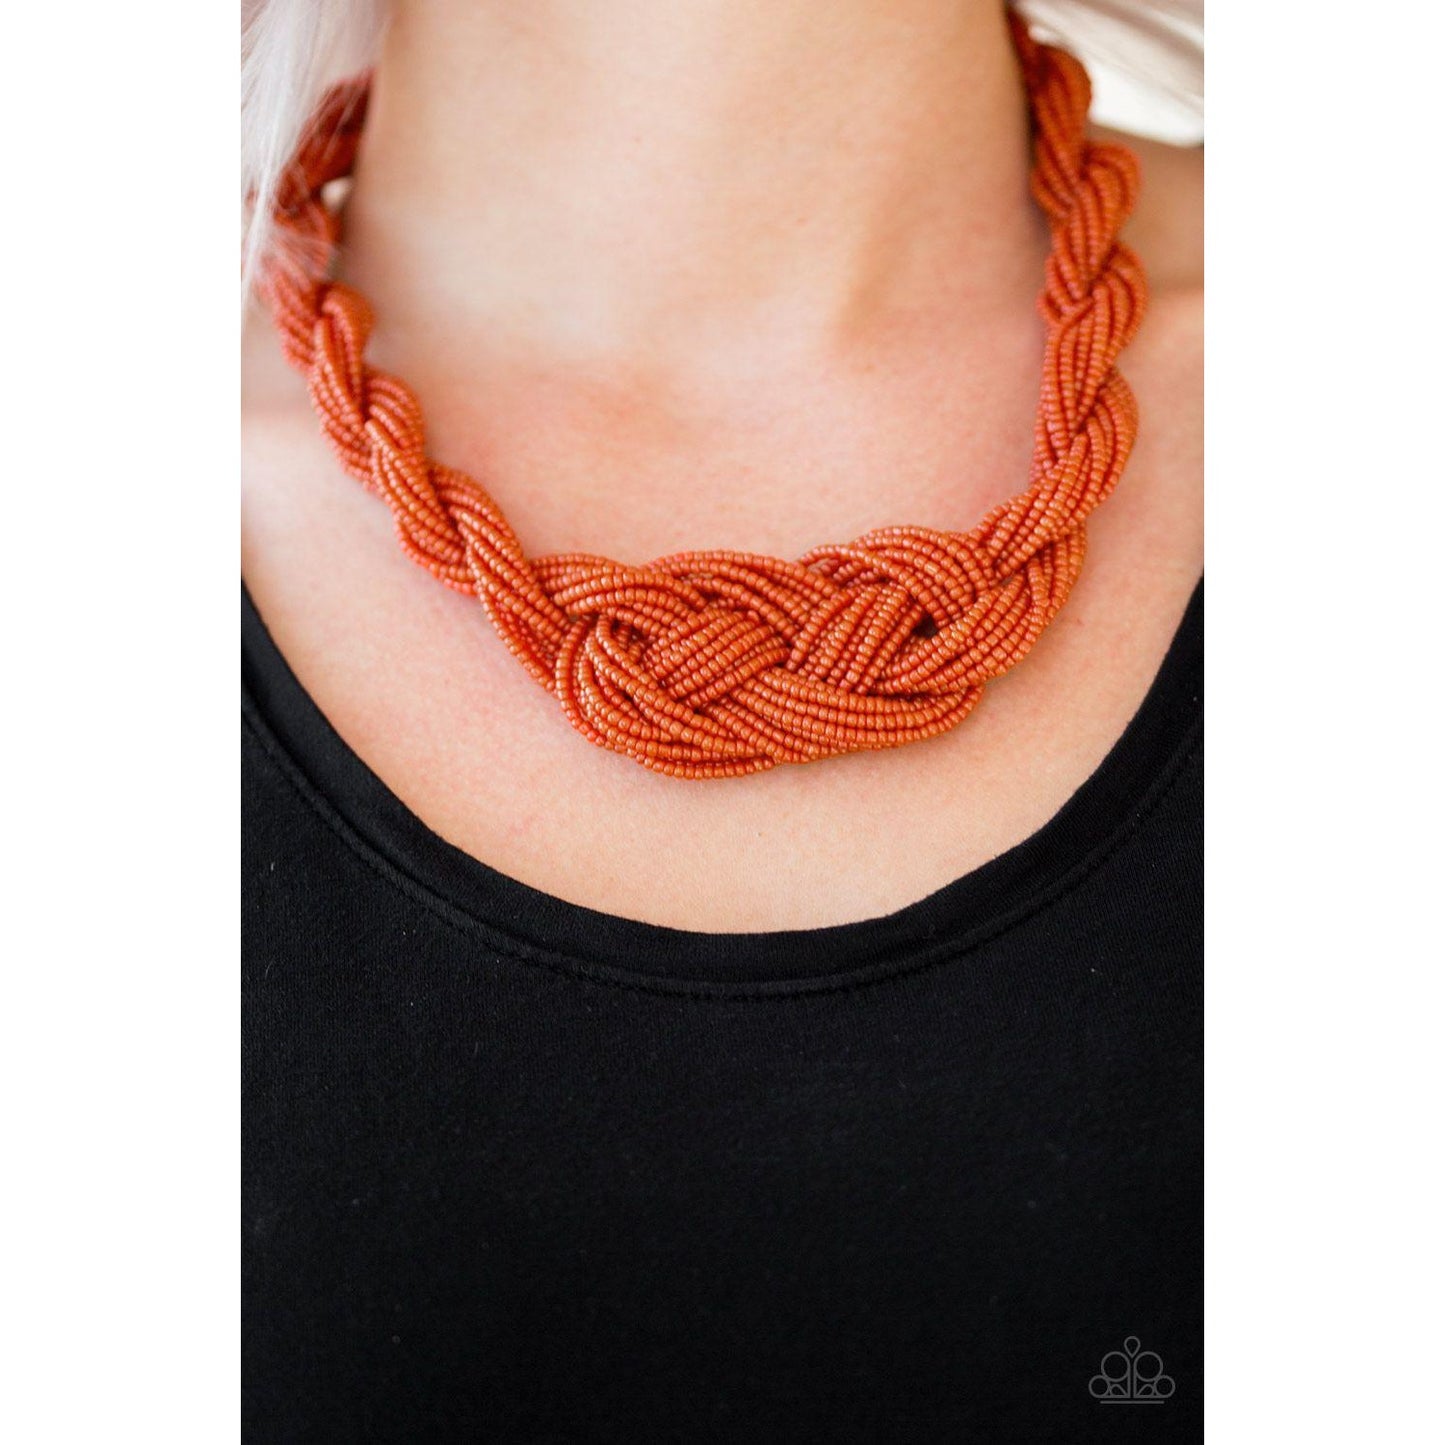 A Standing Ovation – Orange Necklace 1459